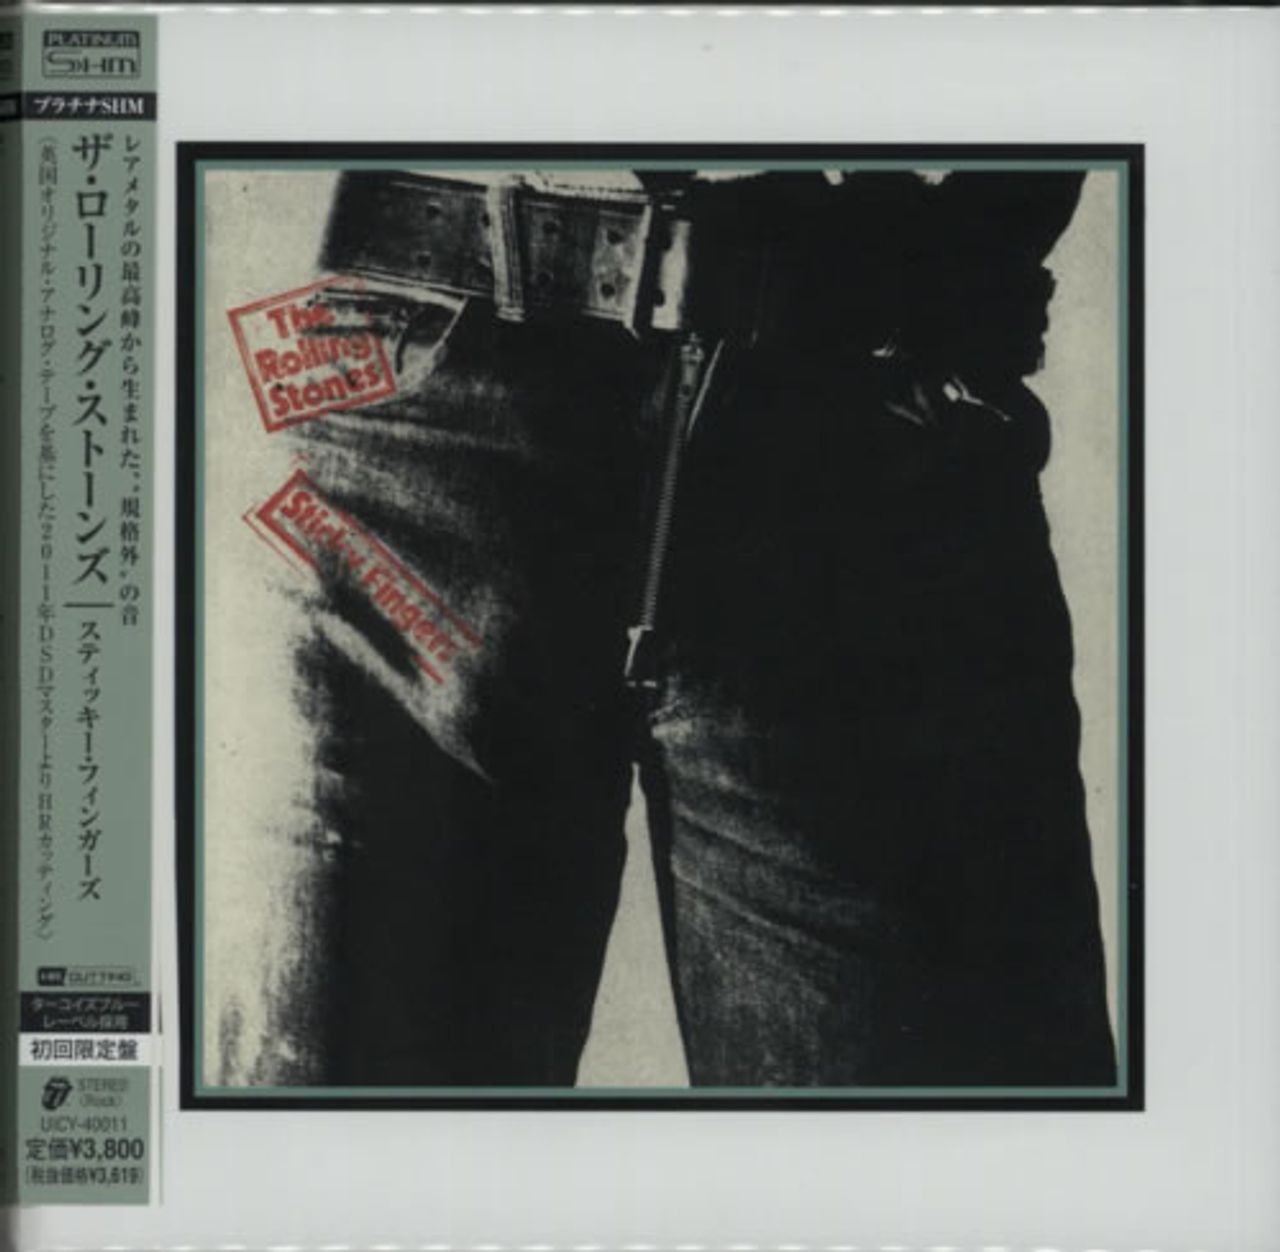 The Rolling Stones Sticky Fingers - Platinum SHM Japanese Cd album